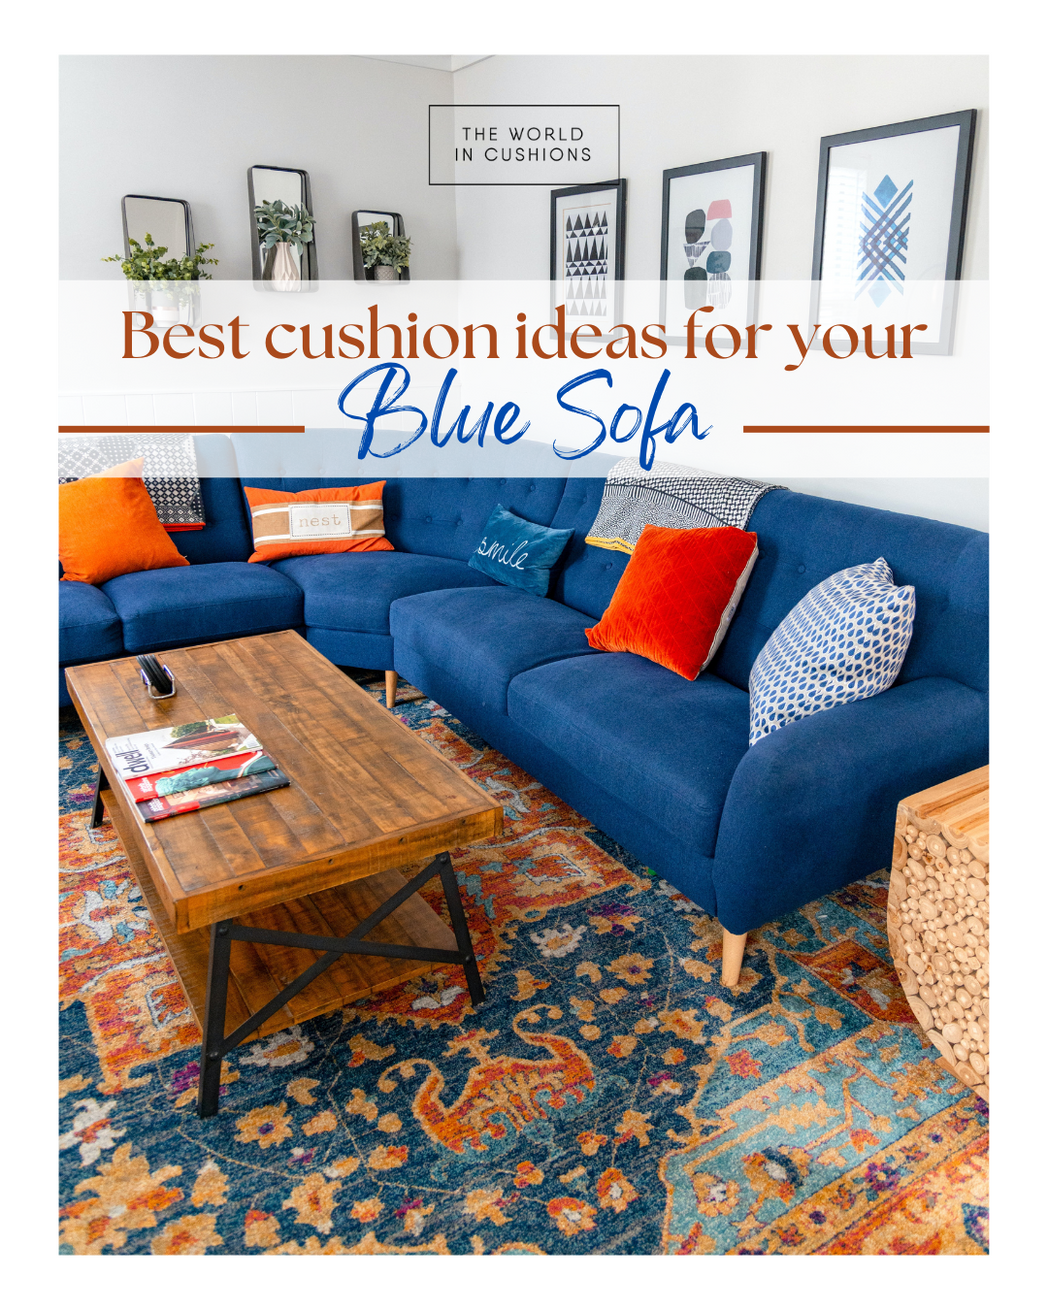 Best cushion ideas for your blue sofa